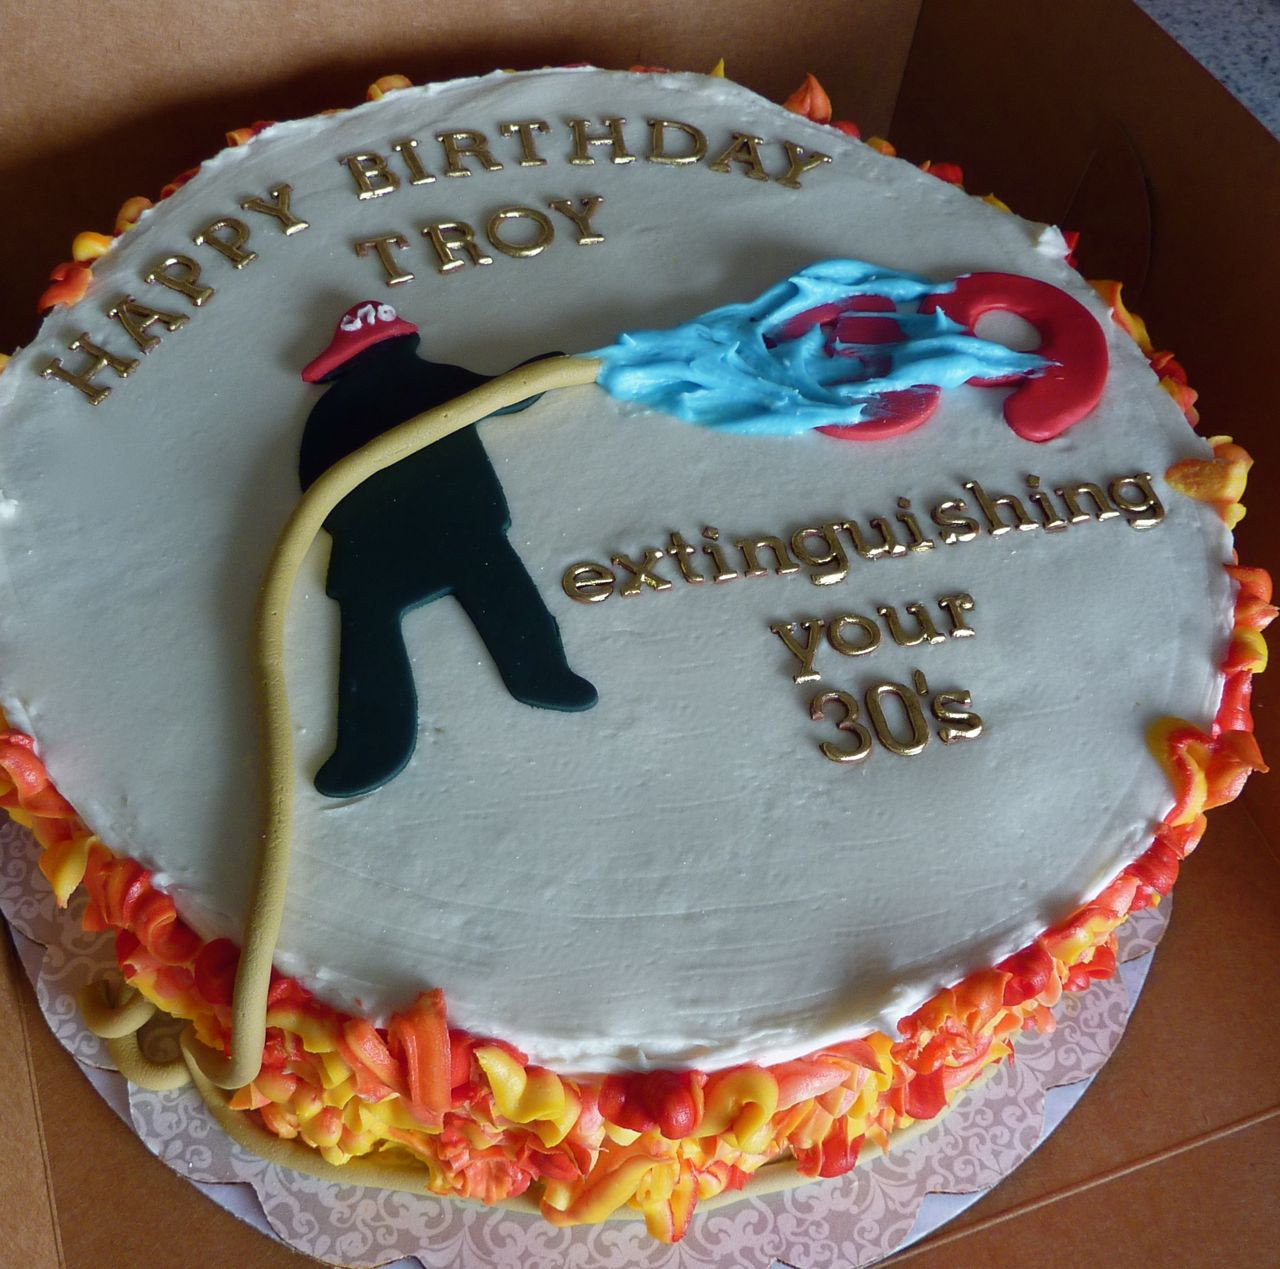 Firefighter Birthday Cake
 Fireman Cakes – Decoration Ideas